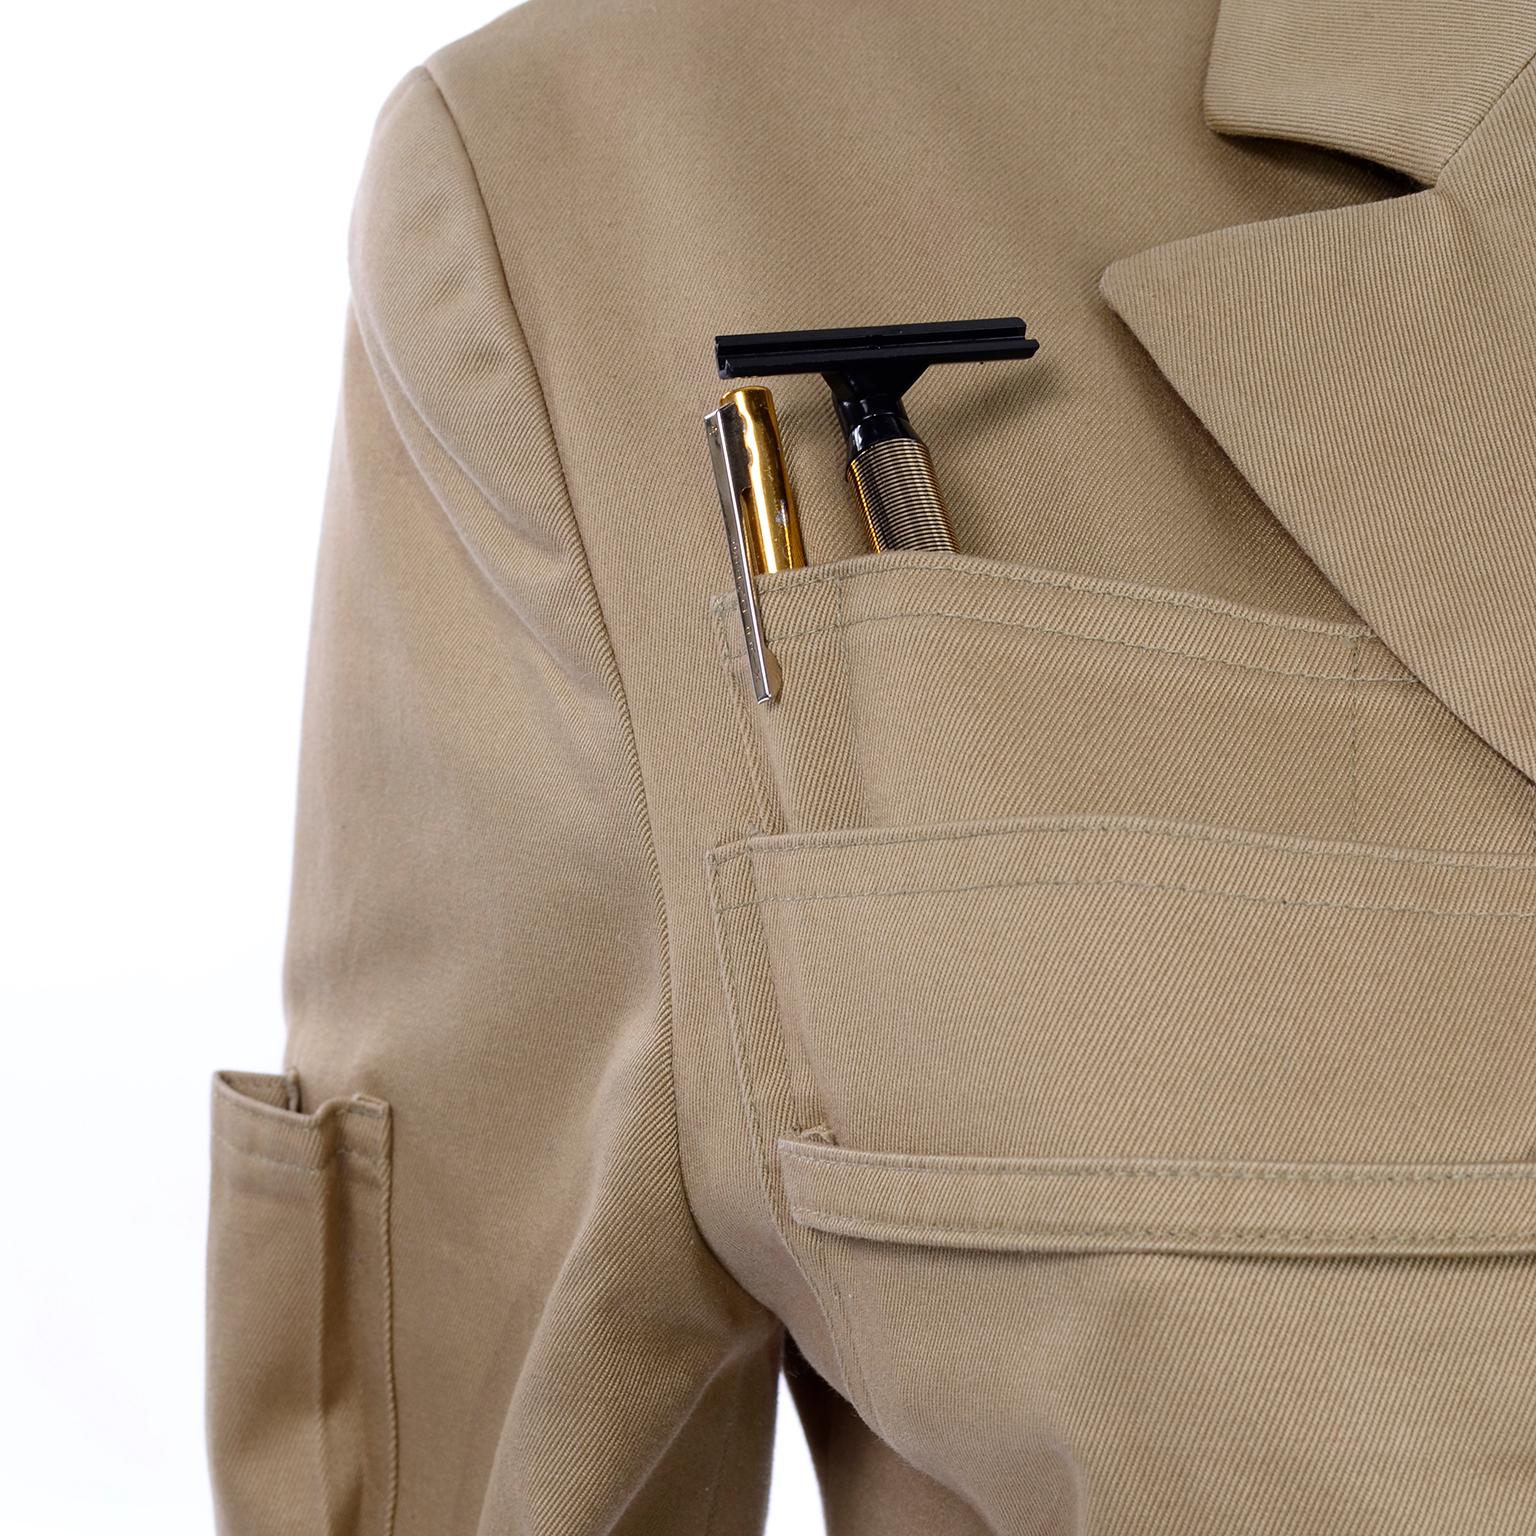 1991 Franco Moschino Couture Survival Jacket in Khaki Cotton Urban Jungle Tools 3